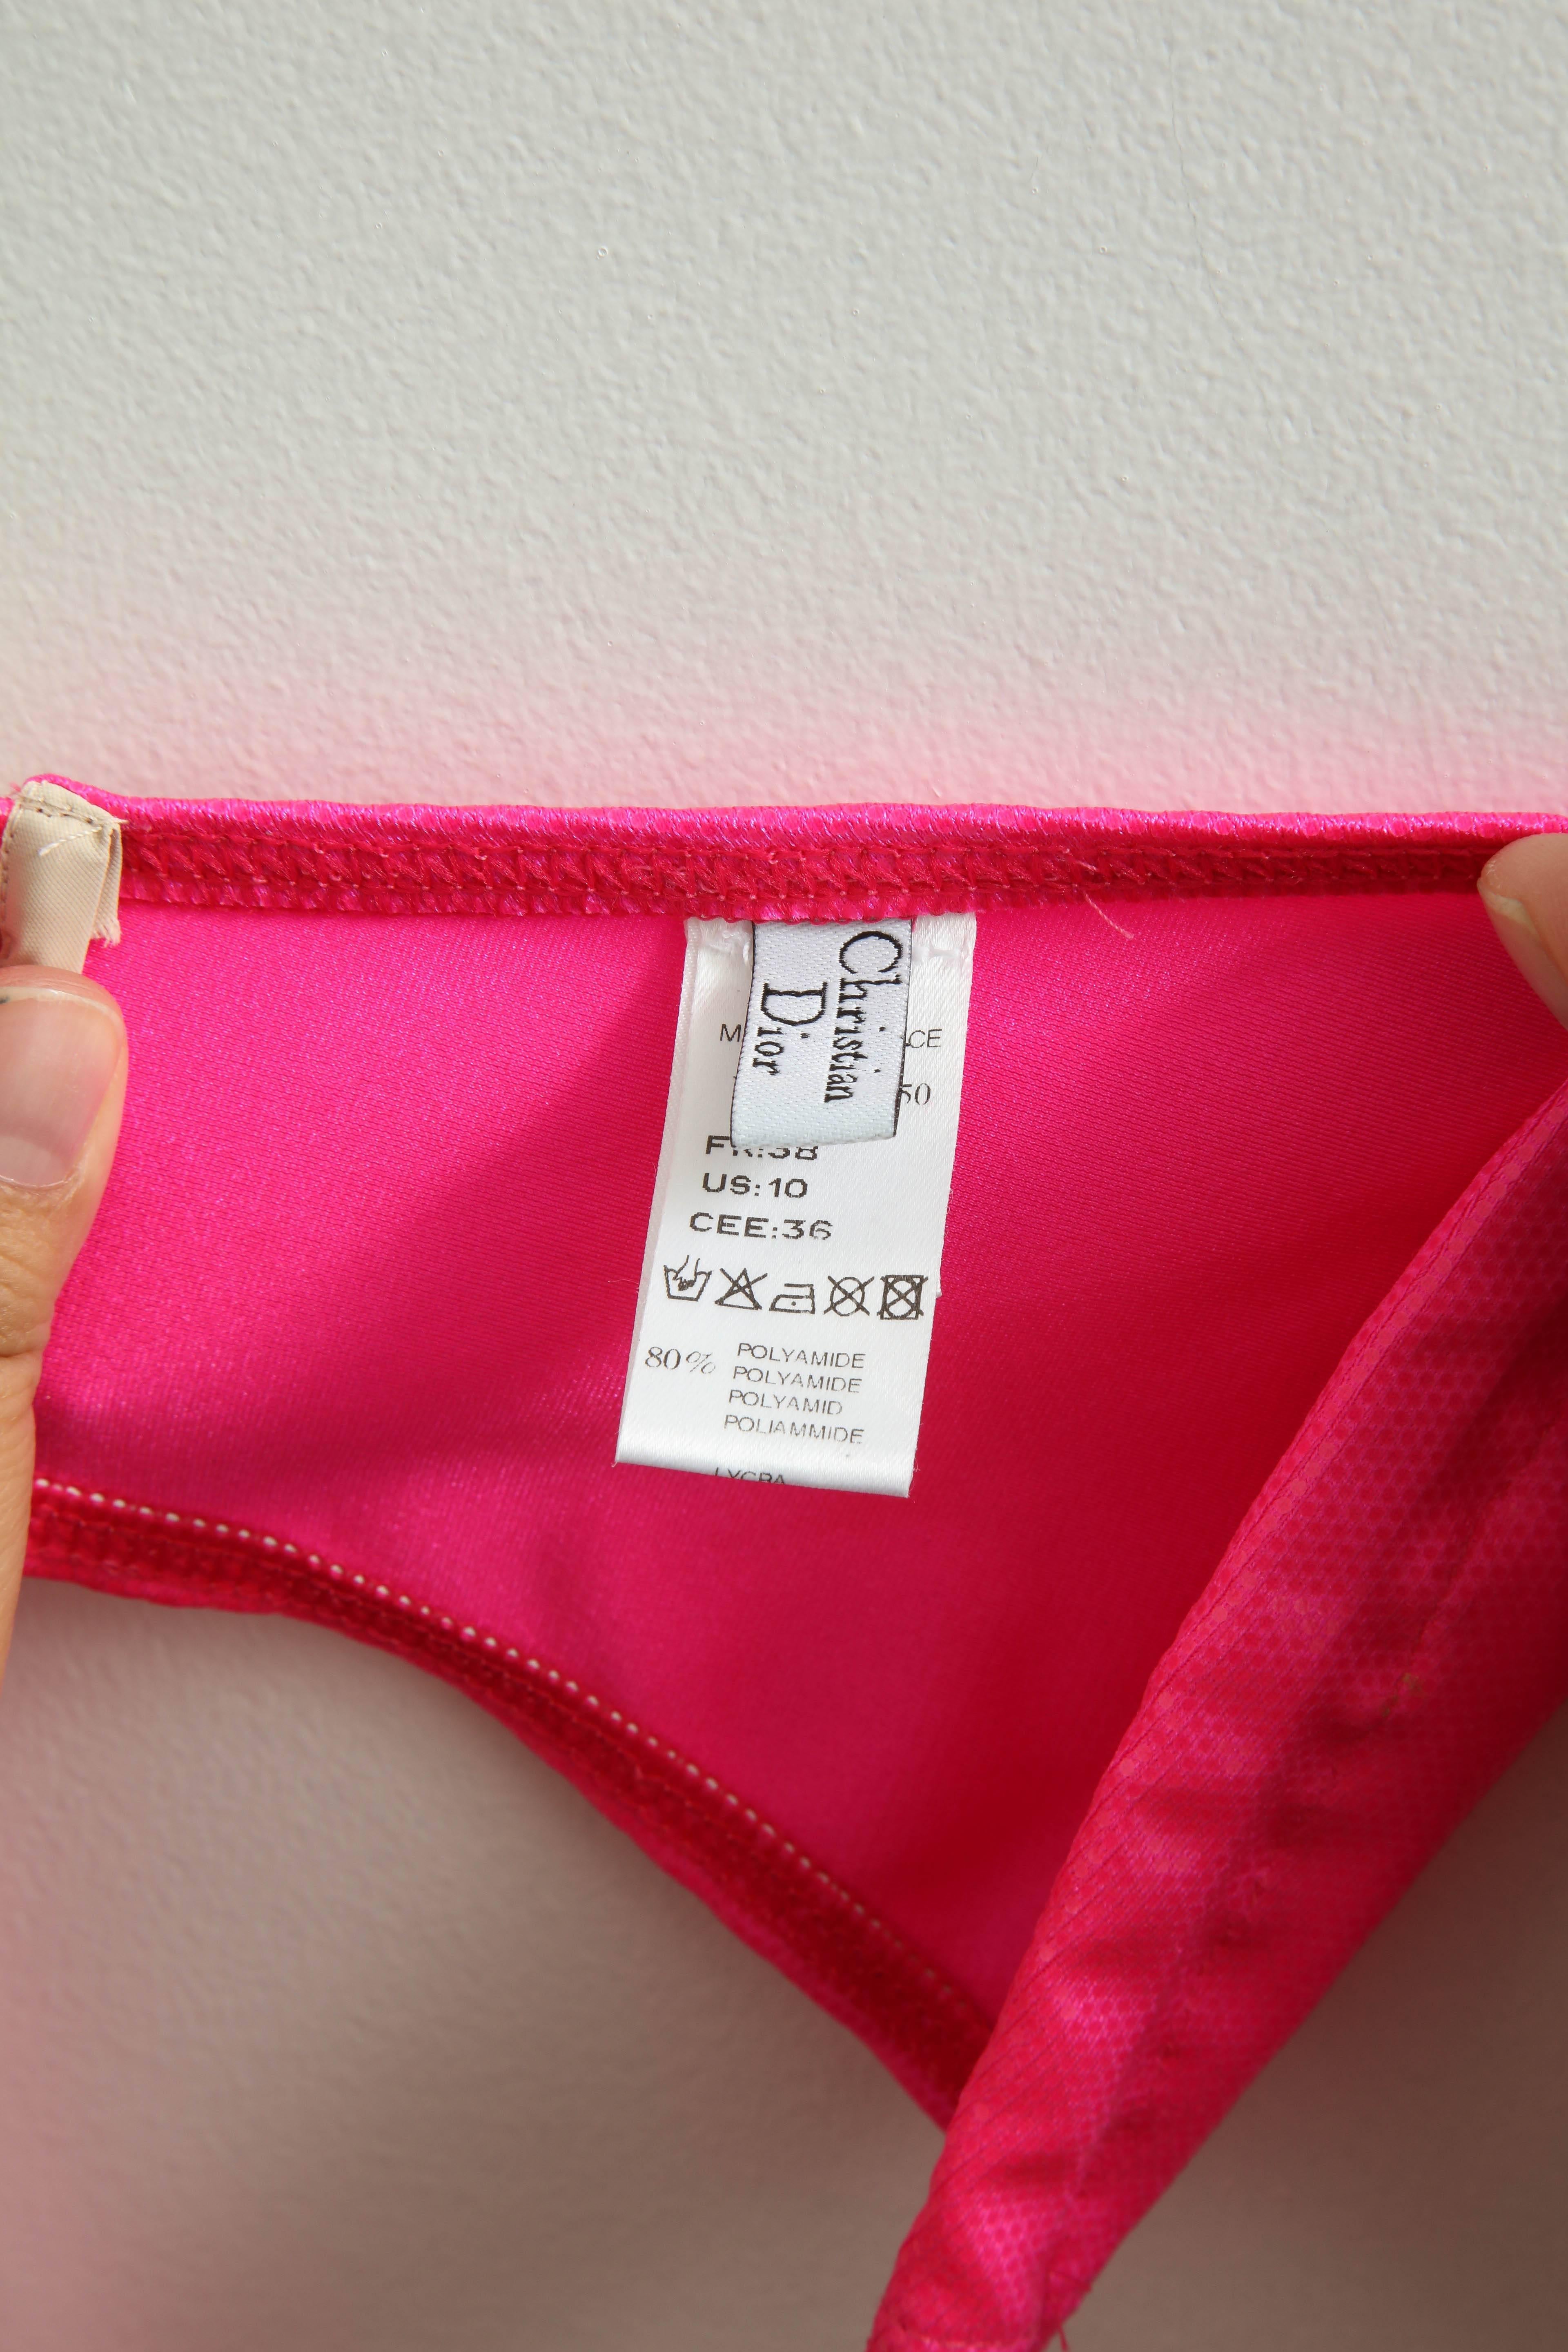 John Galliano for Christian Dior Pink Bikini For Sale 4